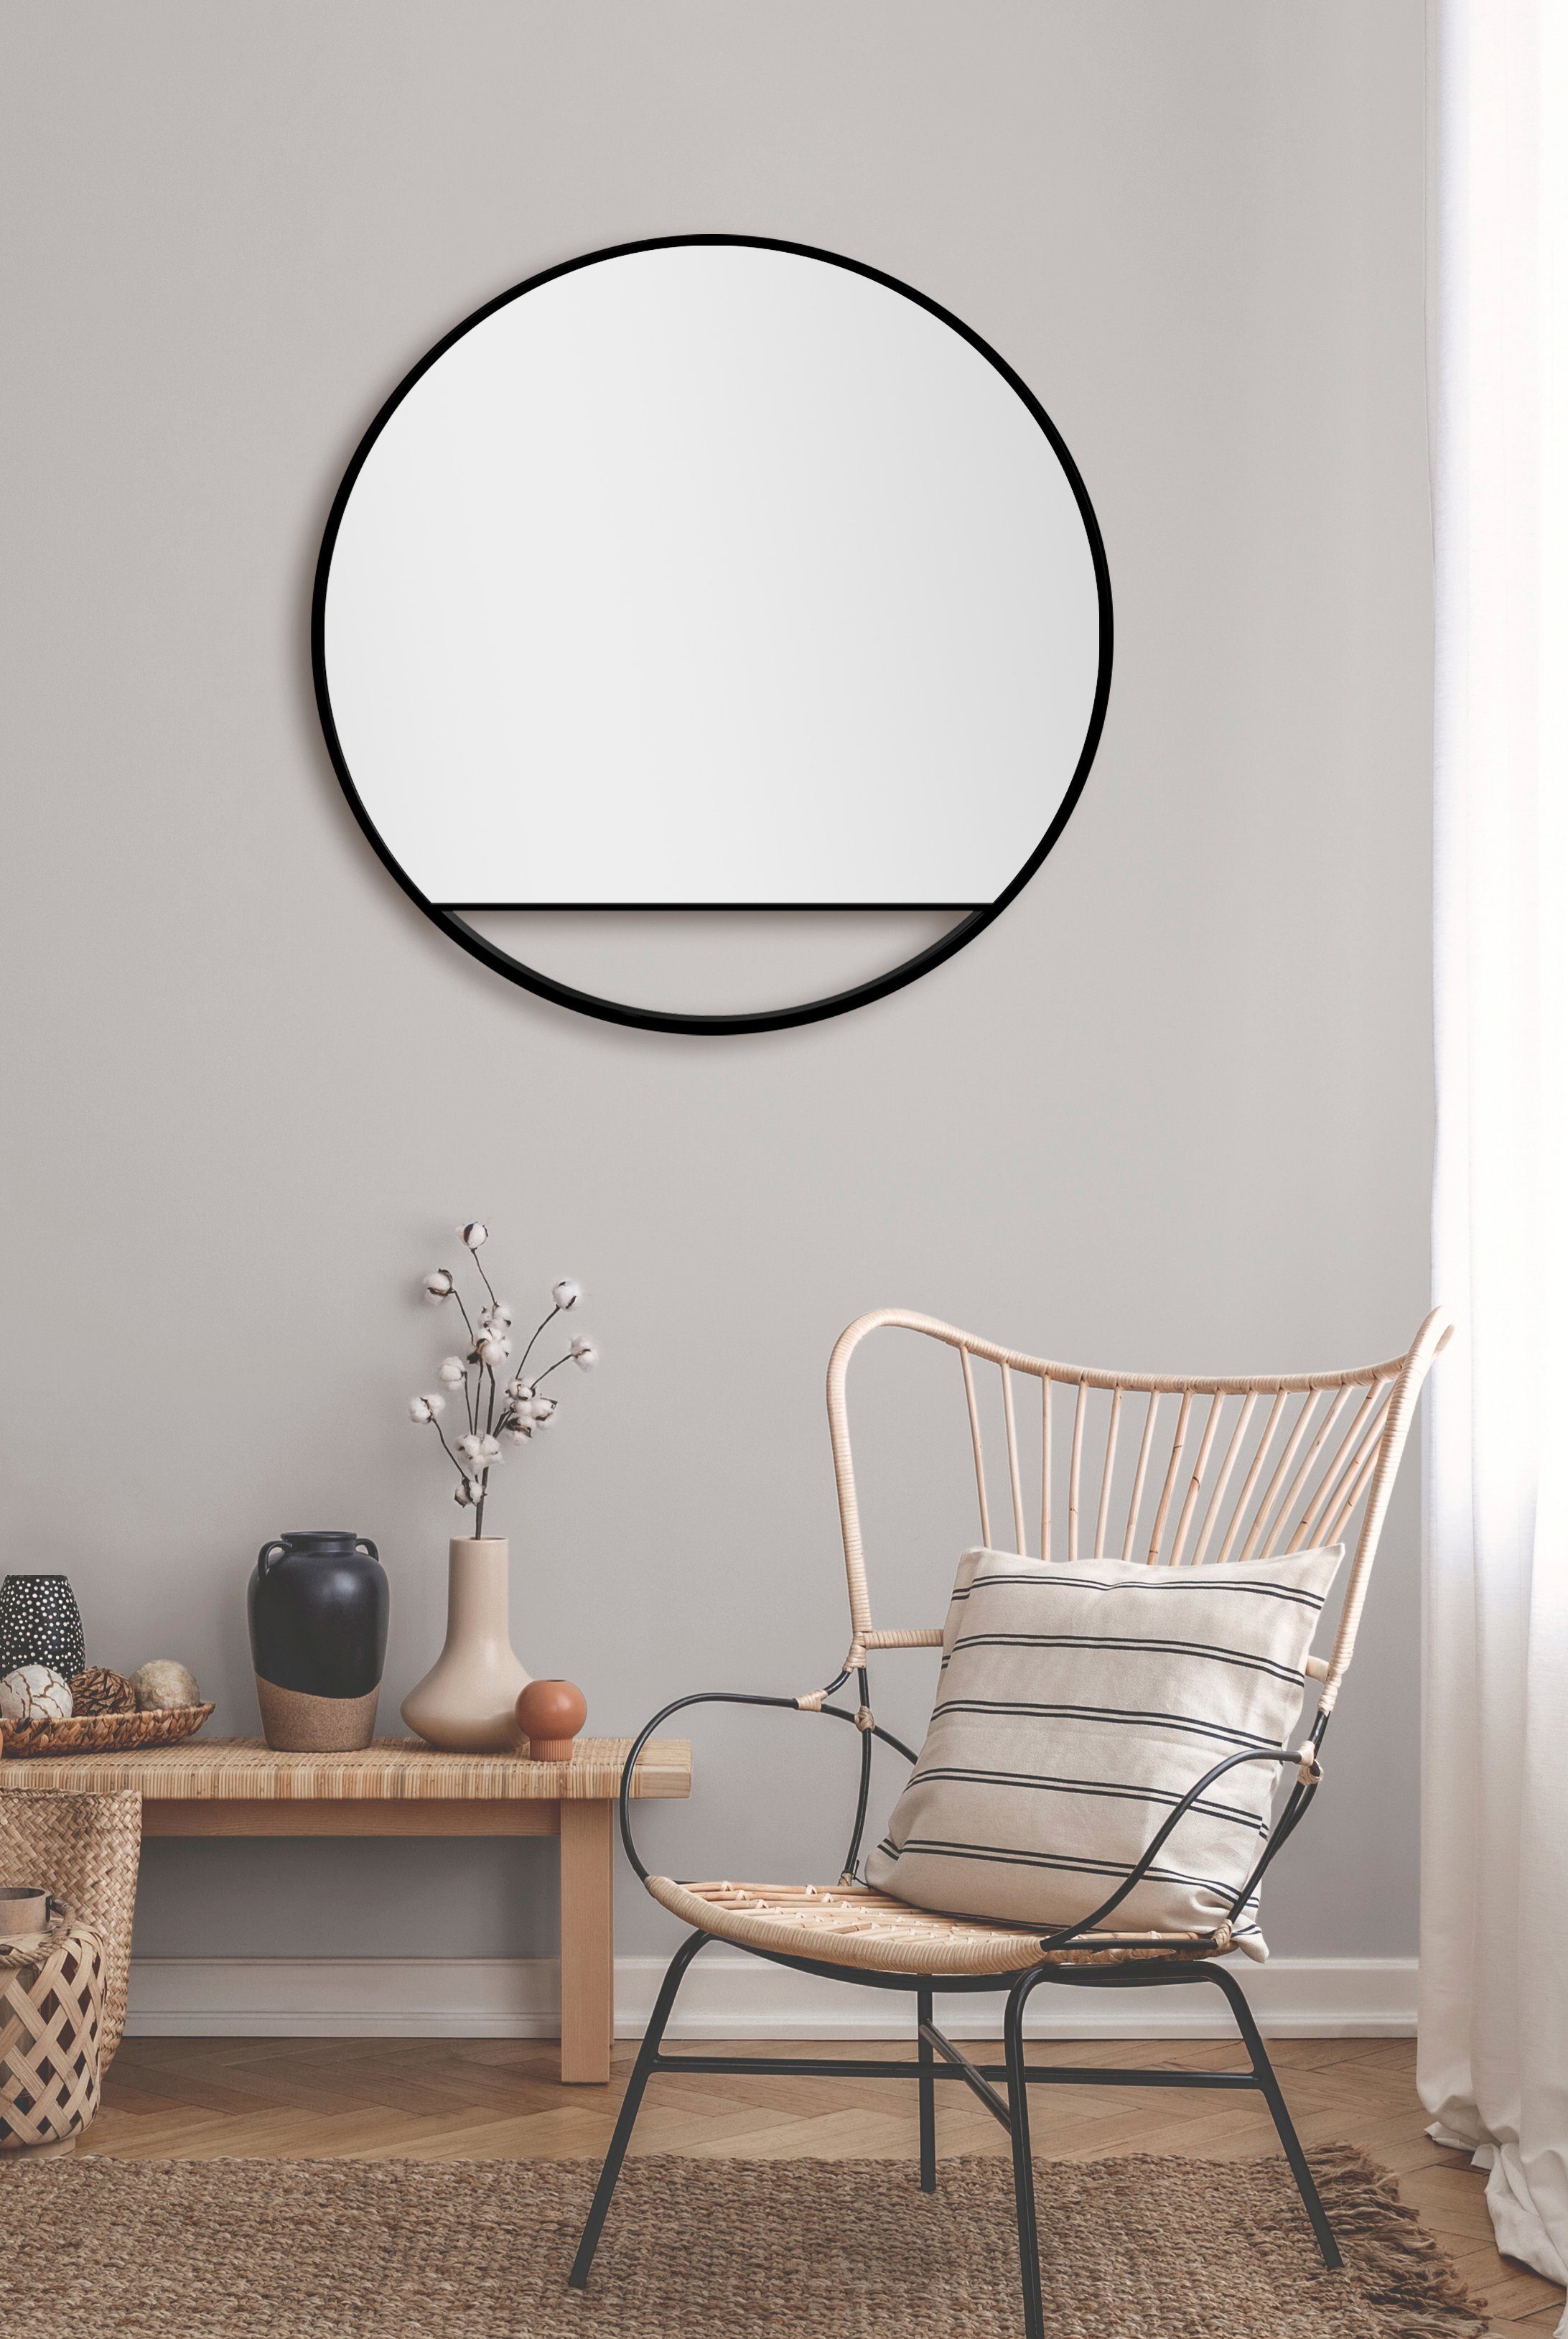 cm 80 Talos Ø dekorativer Spiegel Wandspiegel, runder Aluminiumrahmen, mit